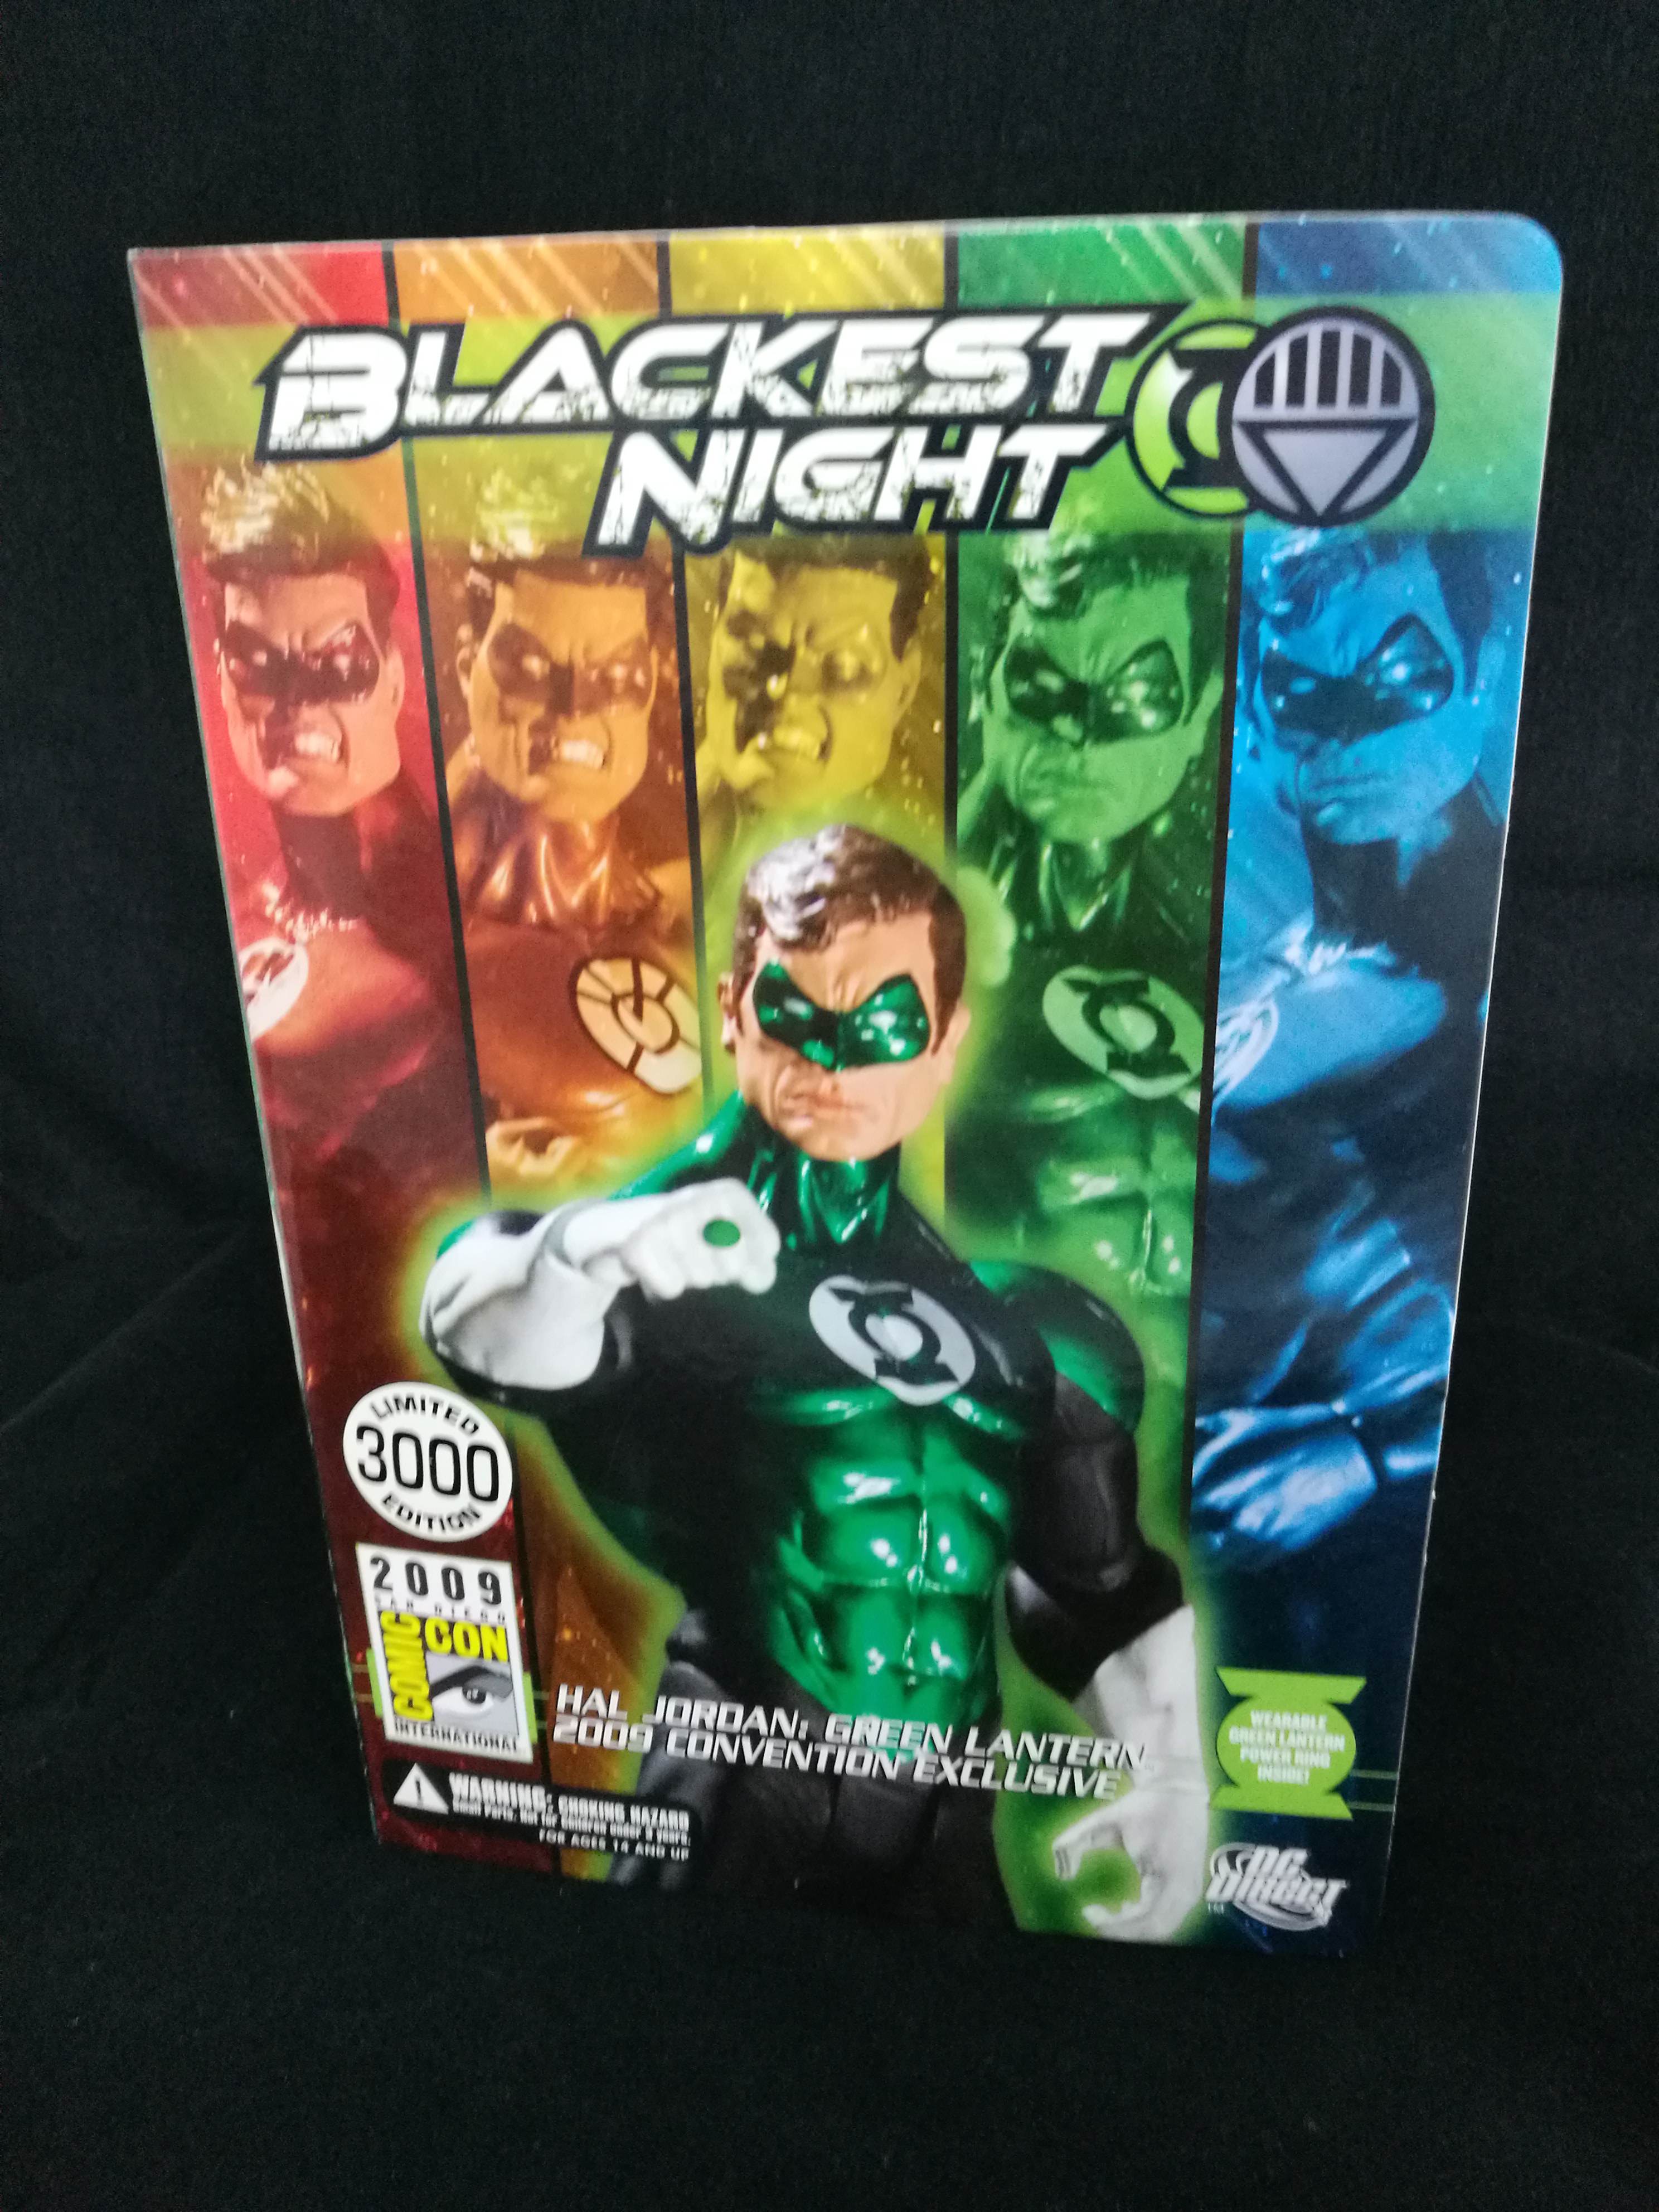 Comiccon 2009 Blackest Night Green Lantern